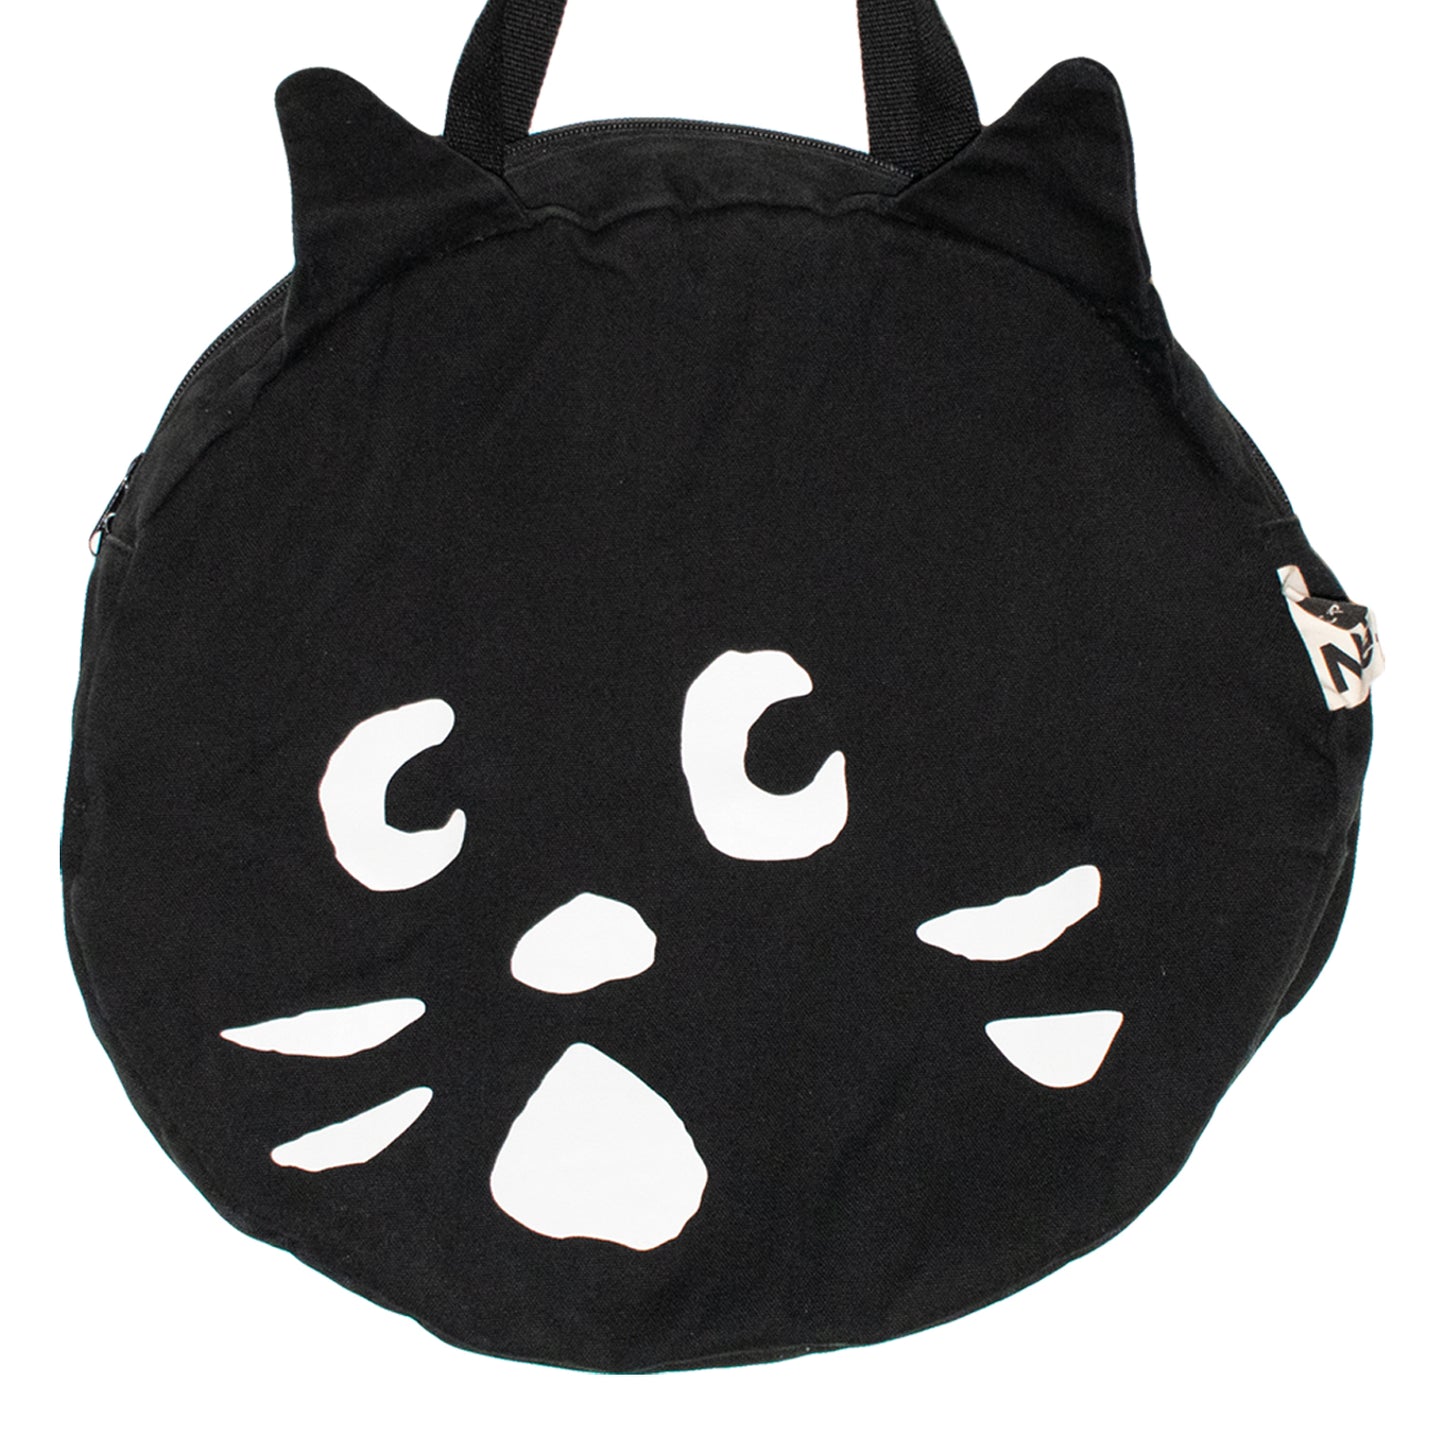 Né-Net Cat Tote Bag